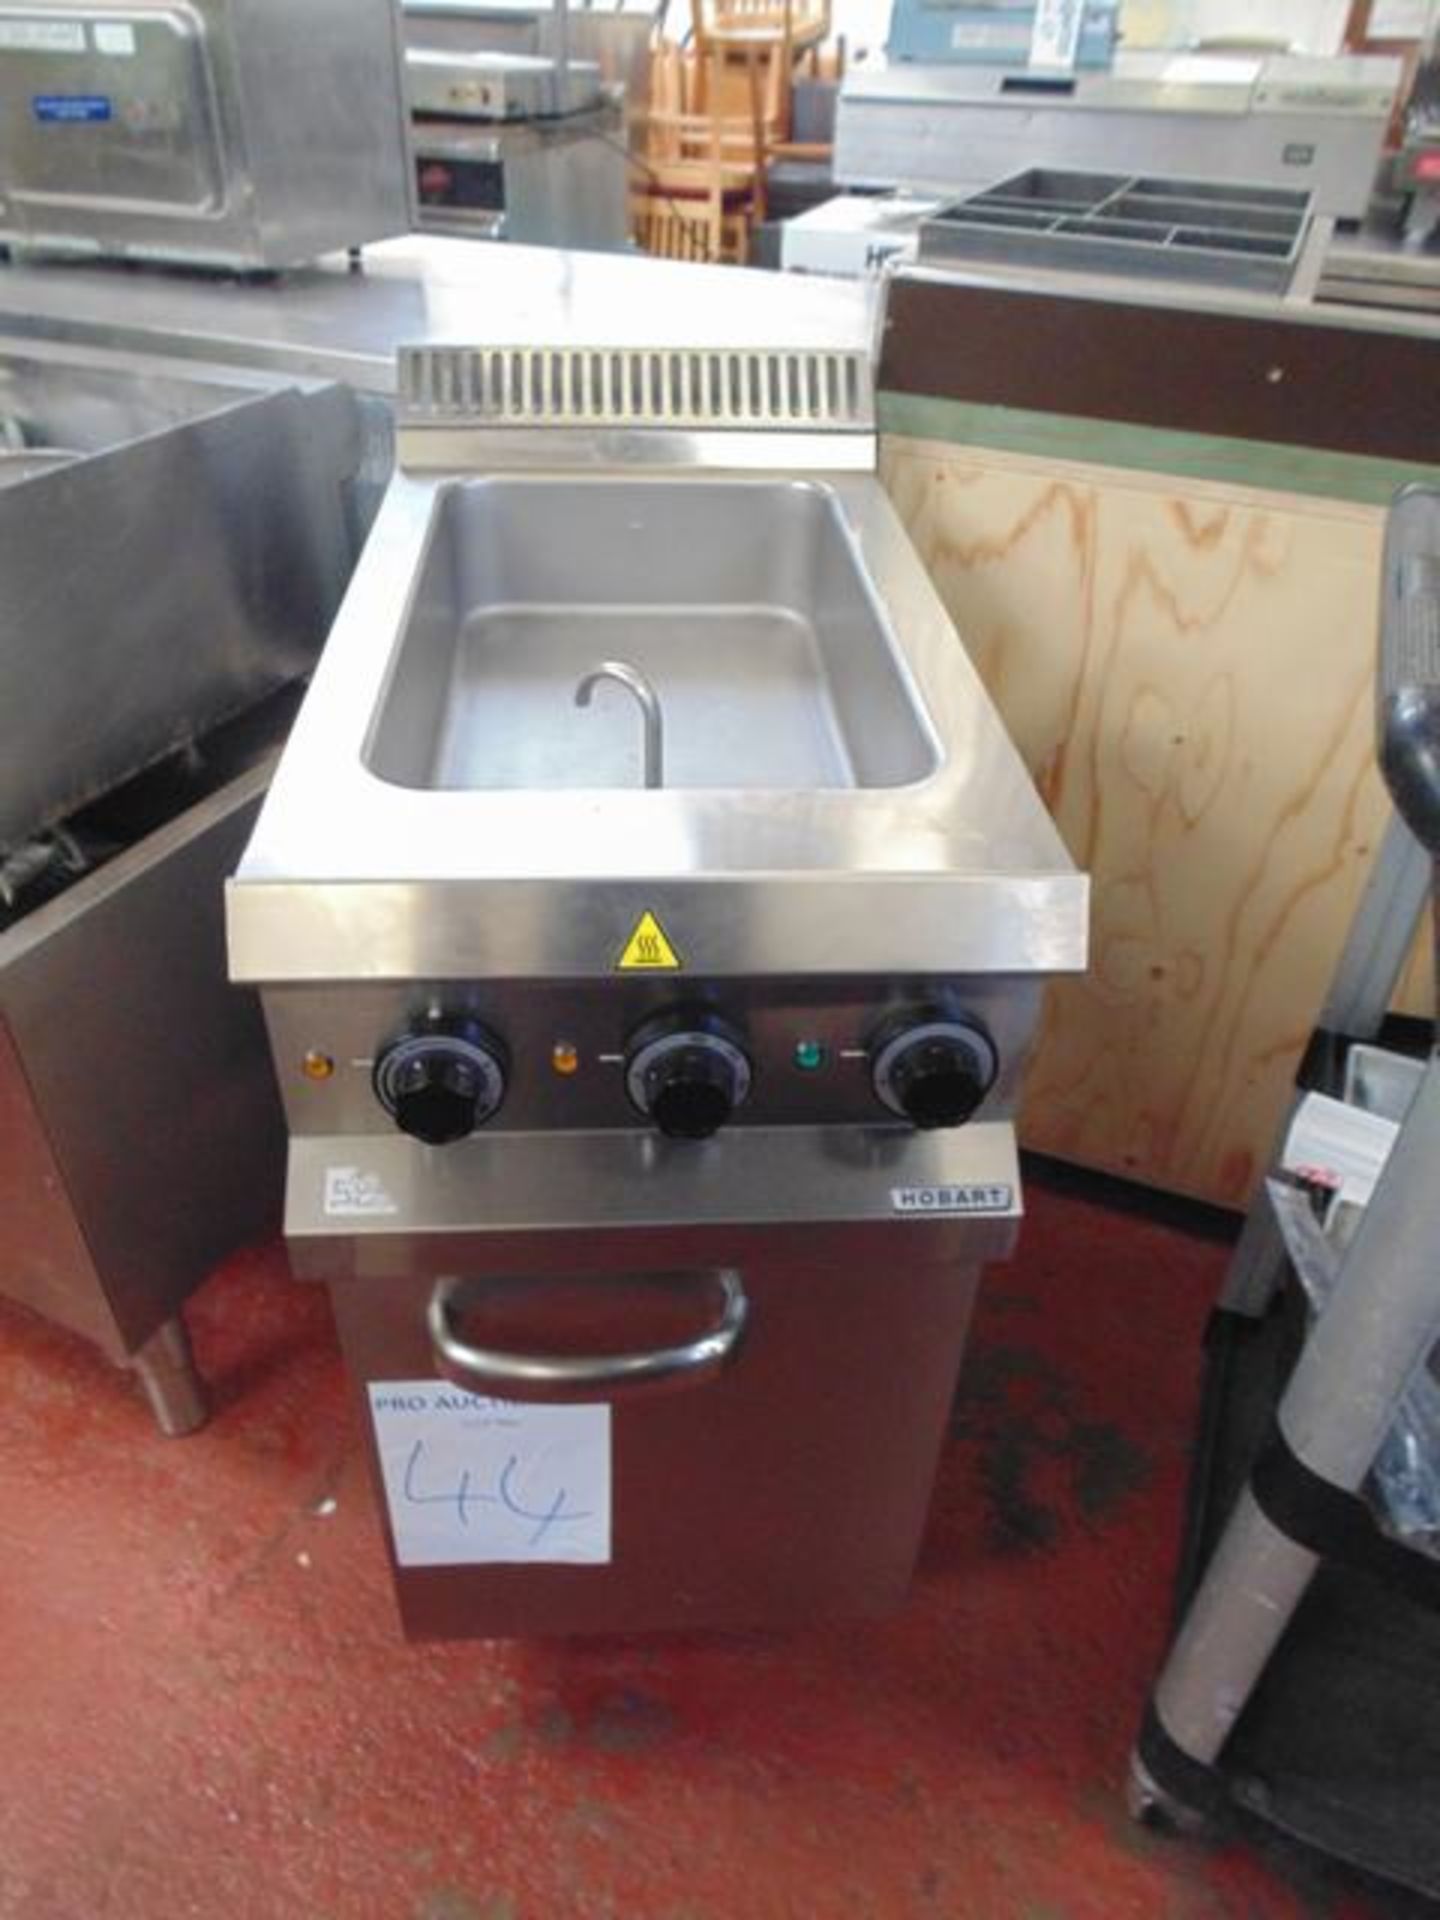 Hobart pasta boiler/cooker pasta boiler/steamer/bain marie. Plumbed to fresh water and waste for